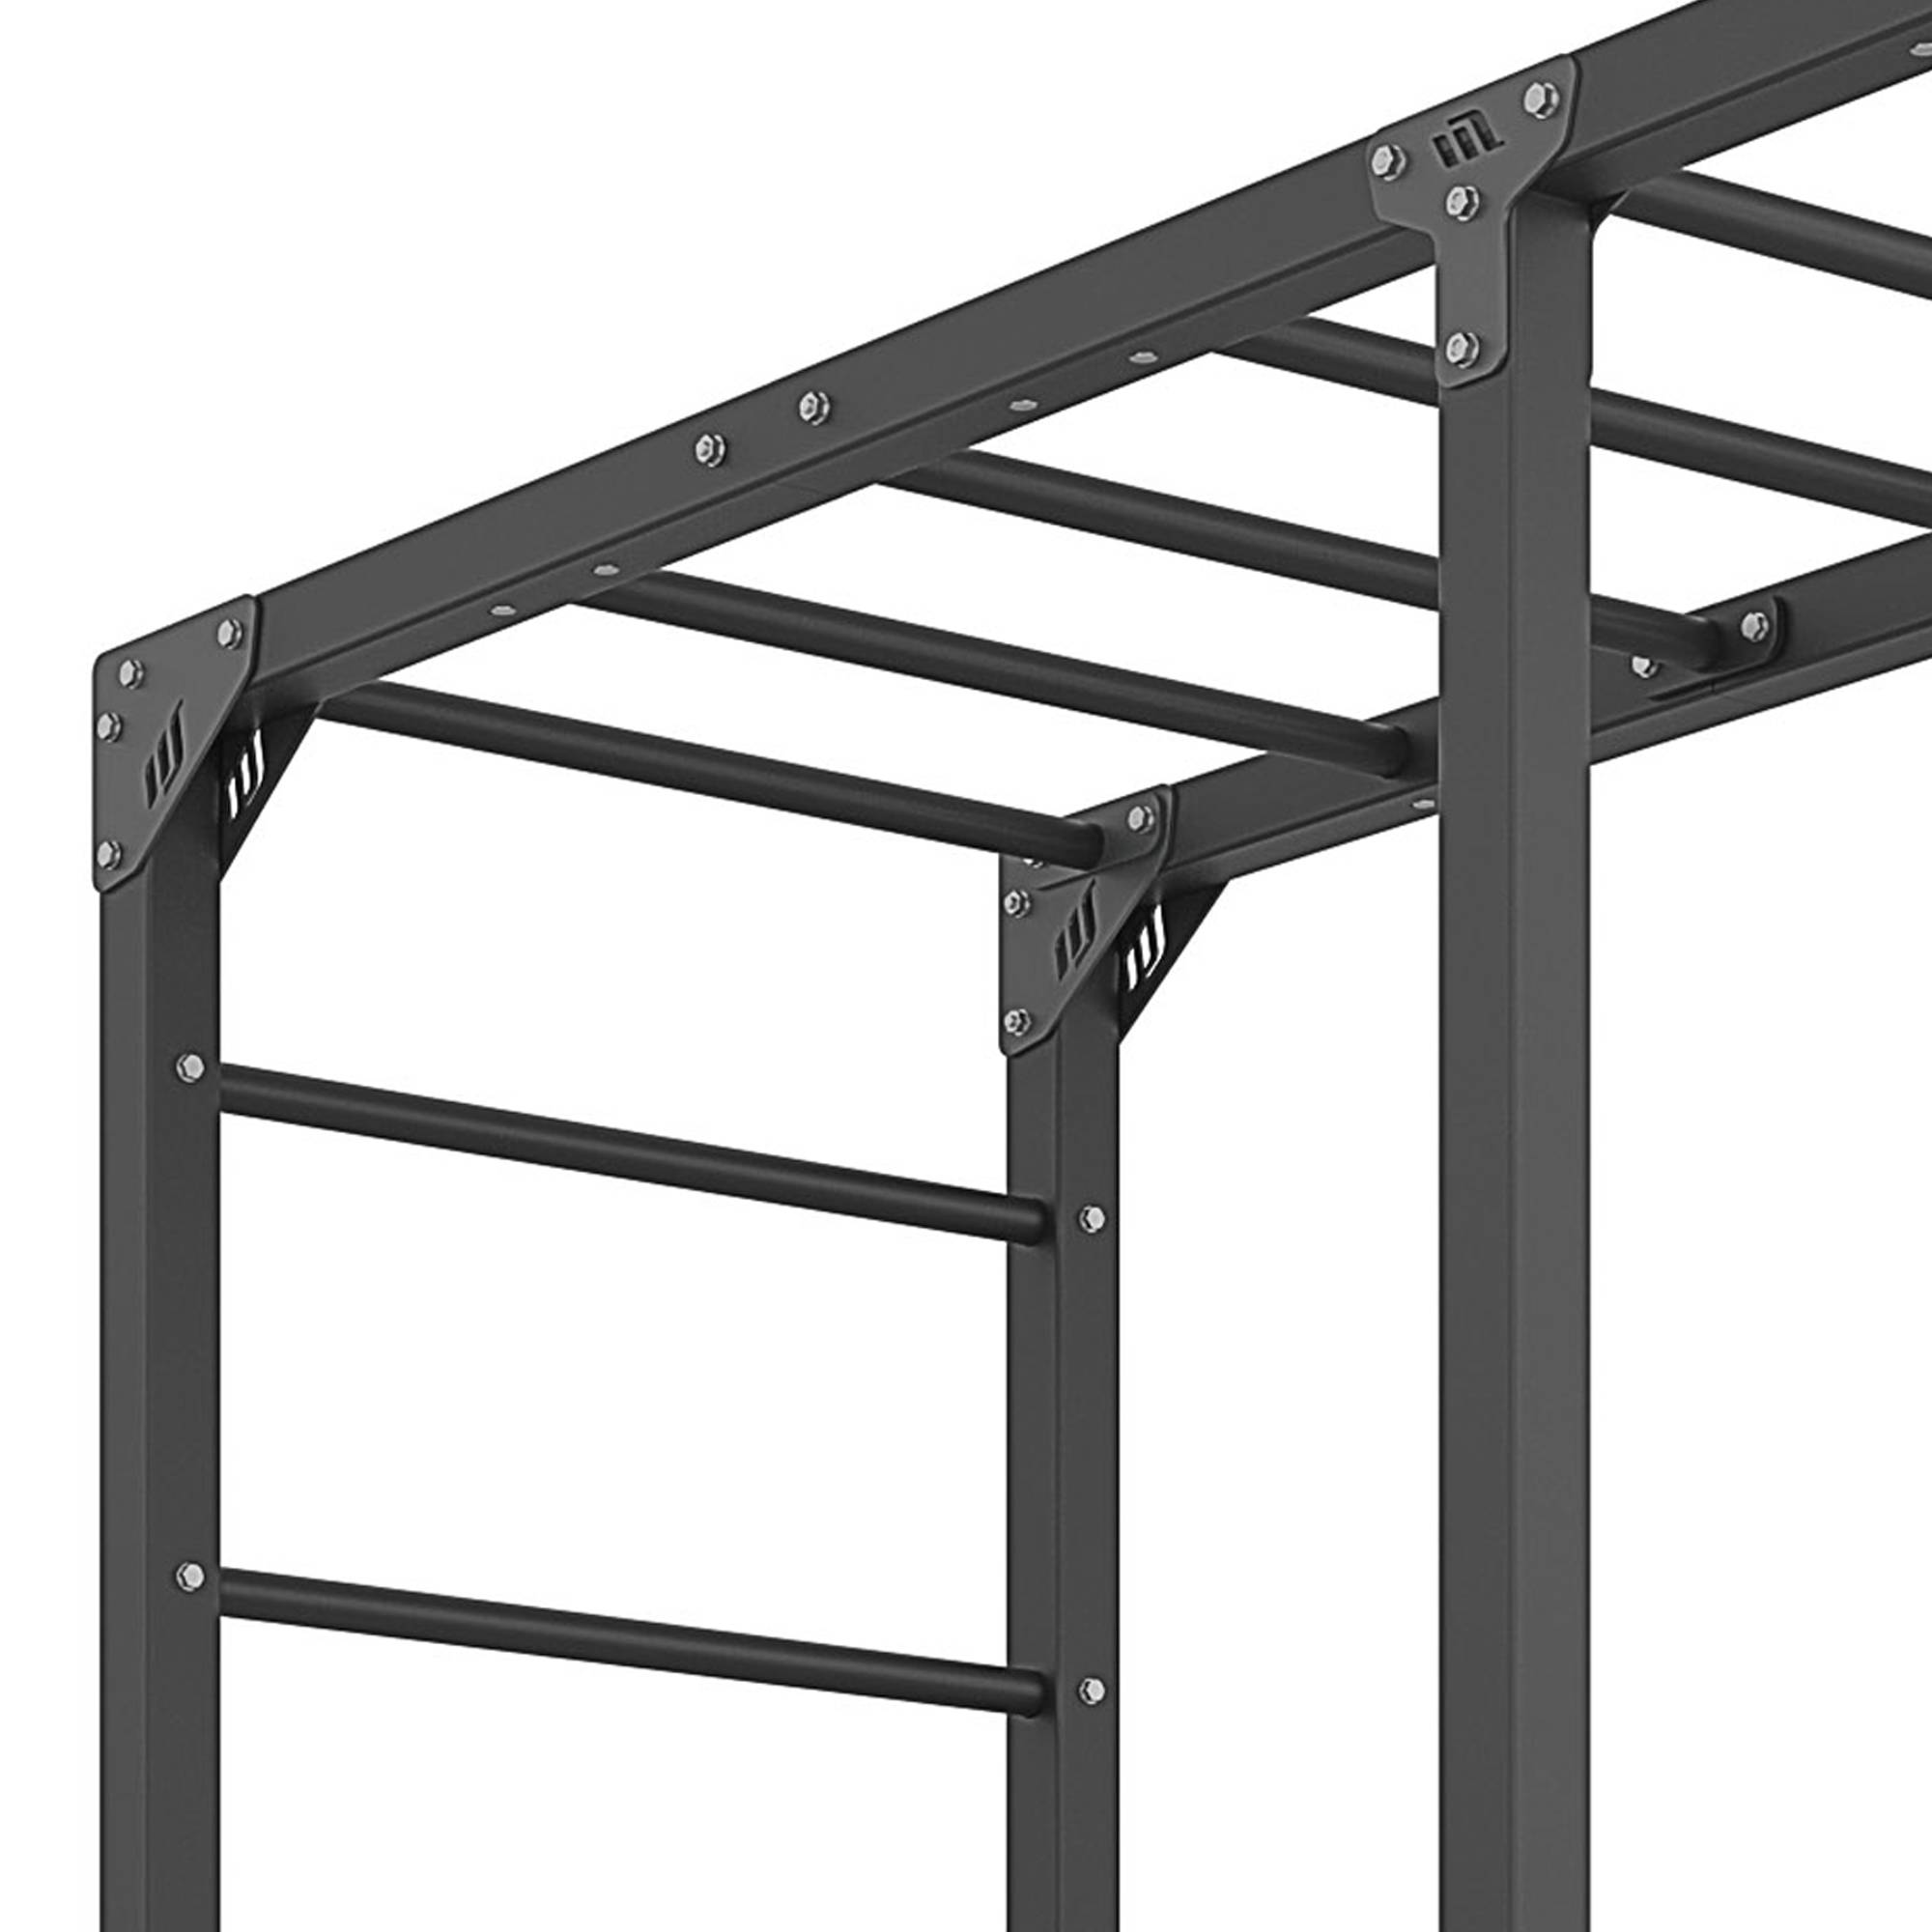 External ladder + pull-up bar with bag holder MO-Z4 - Marbo Sport